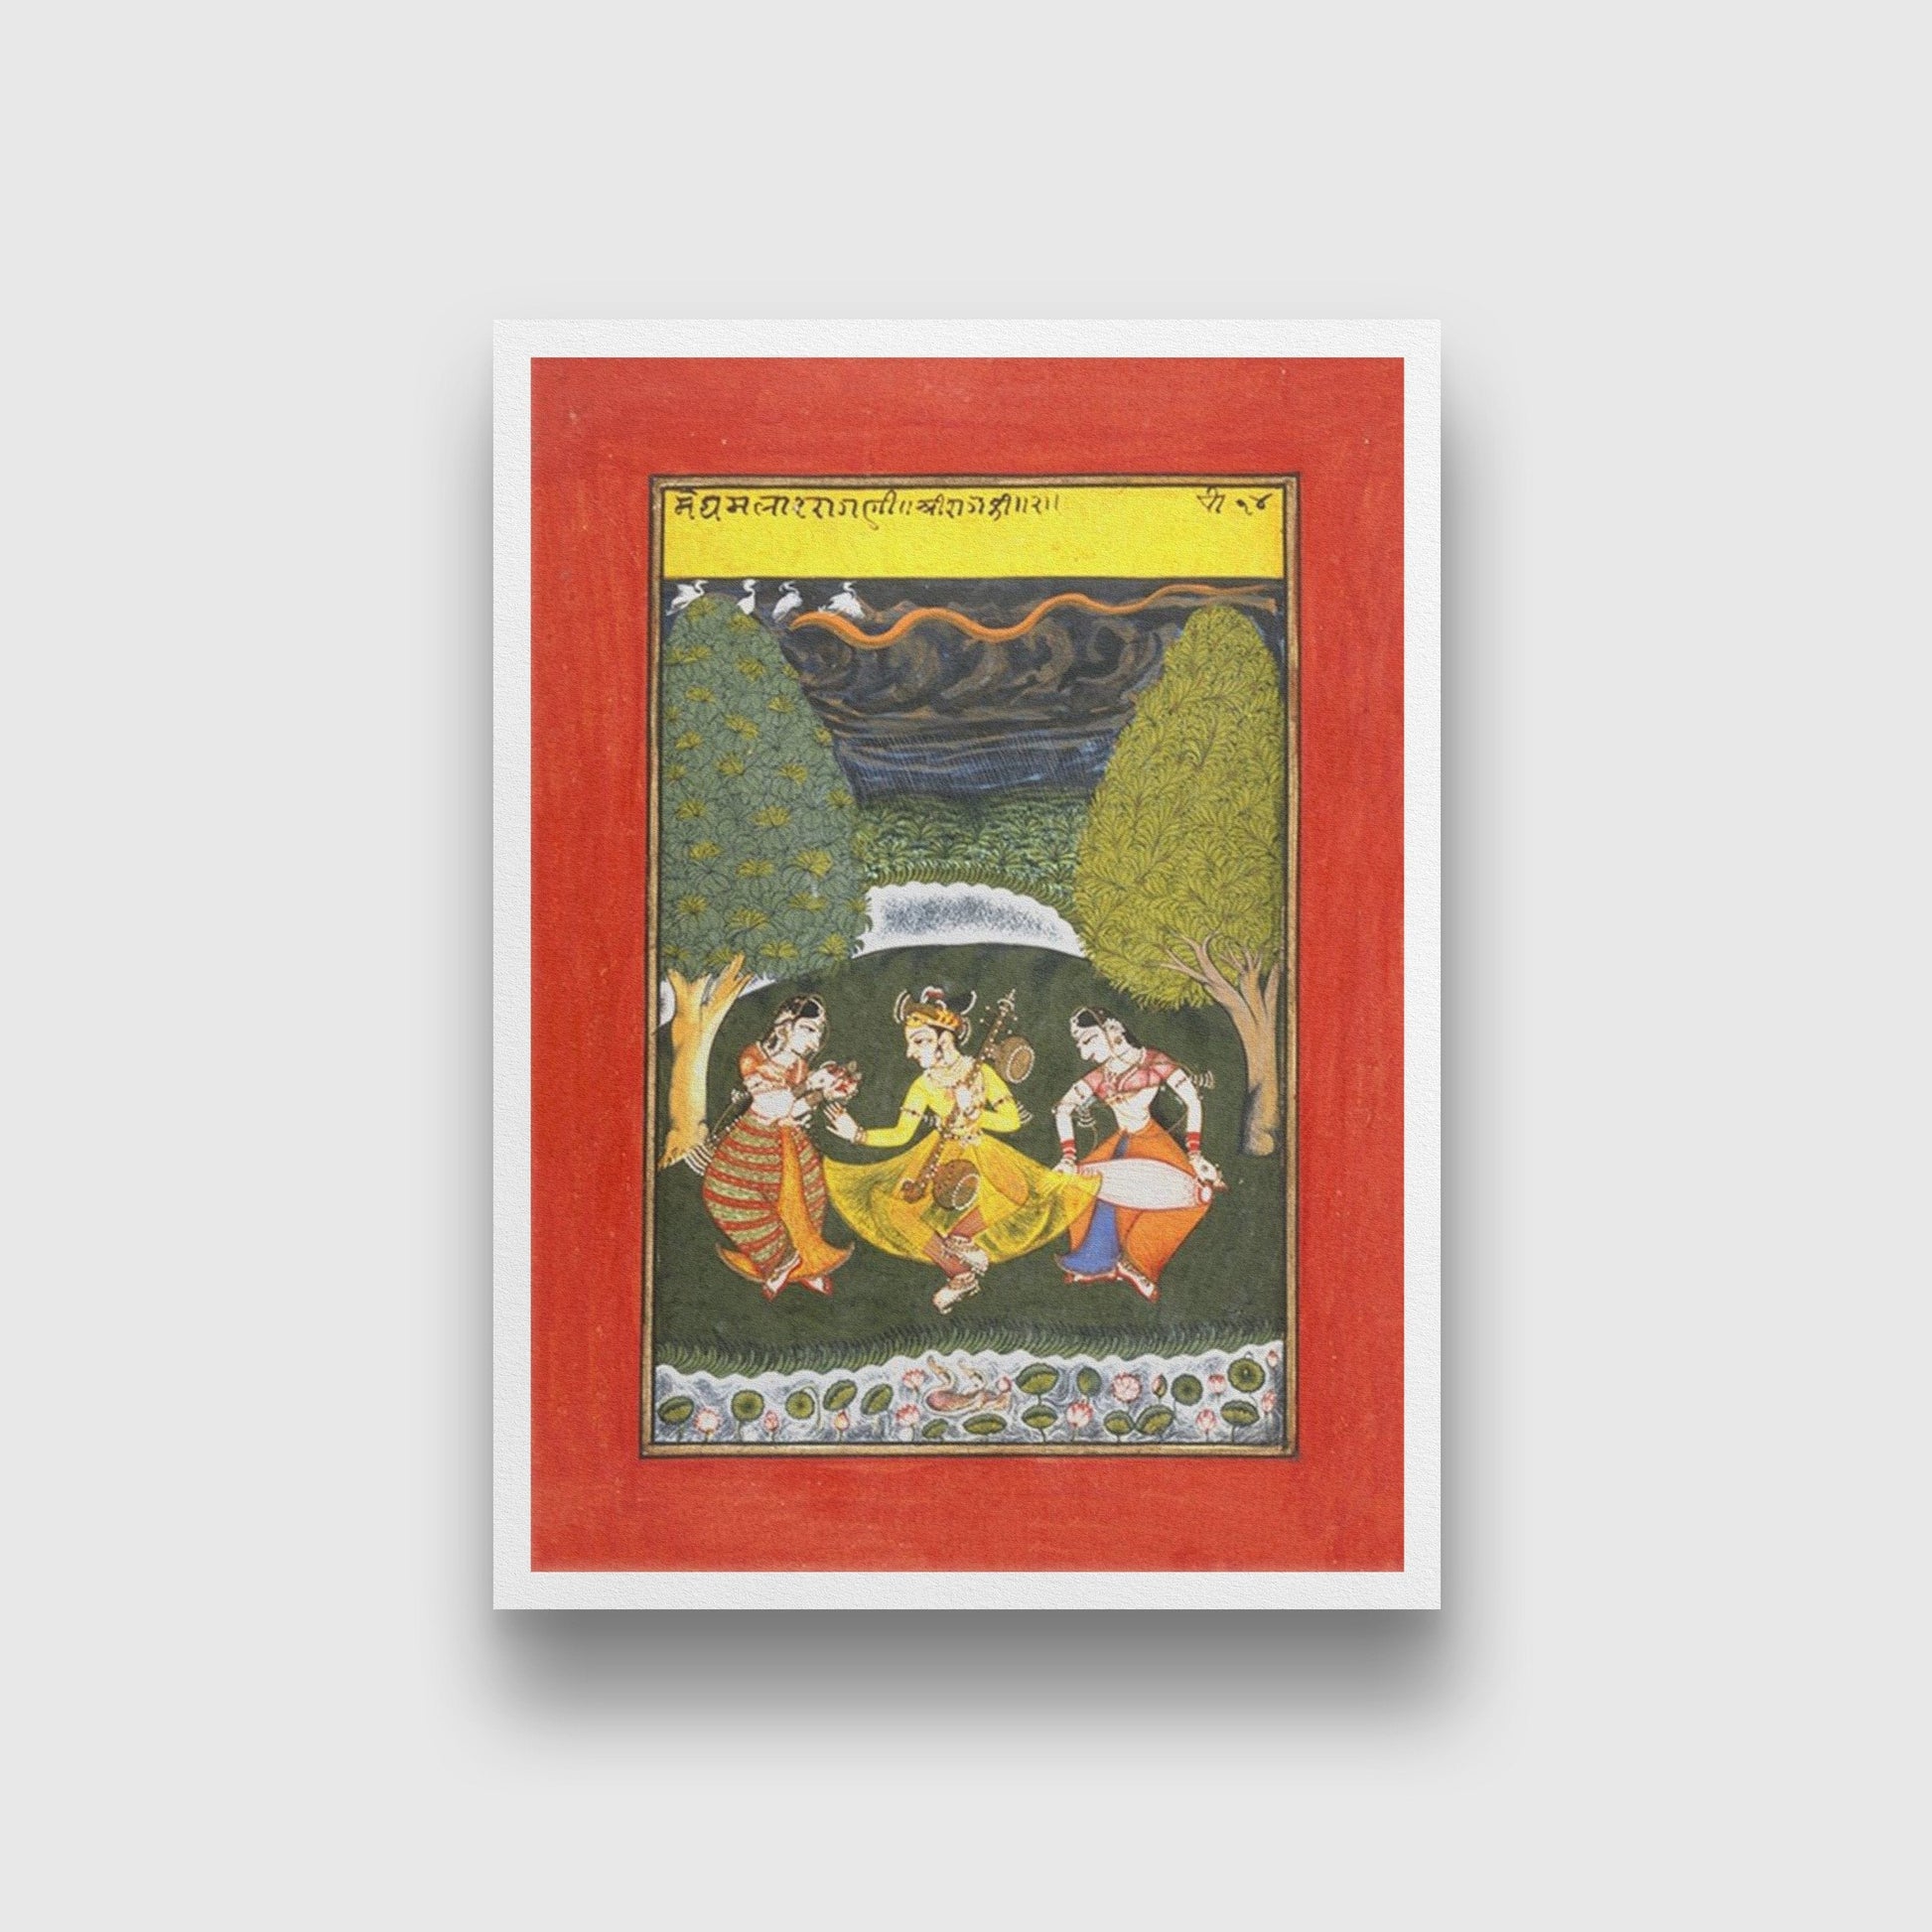 Megha Mallar Raga, Folio from a Ragamala (Garland of Melodies) Painting - Meri Deewar - MeriDeewar